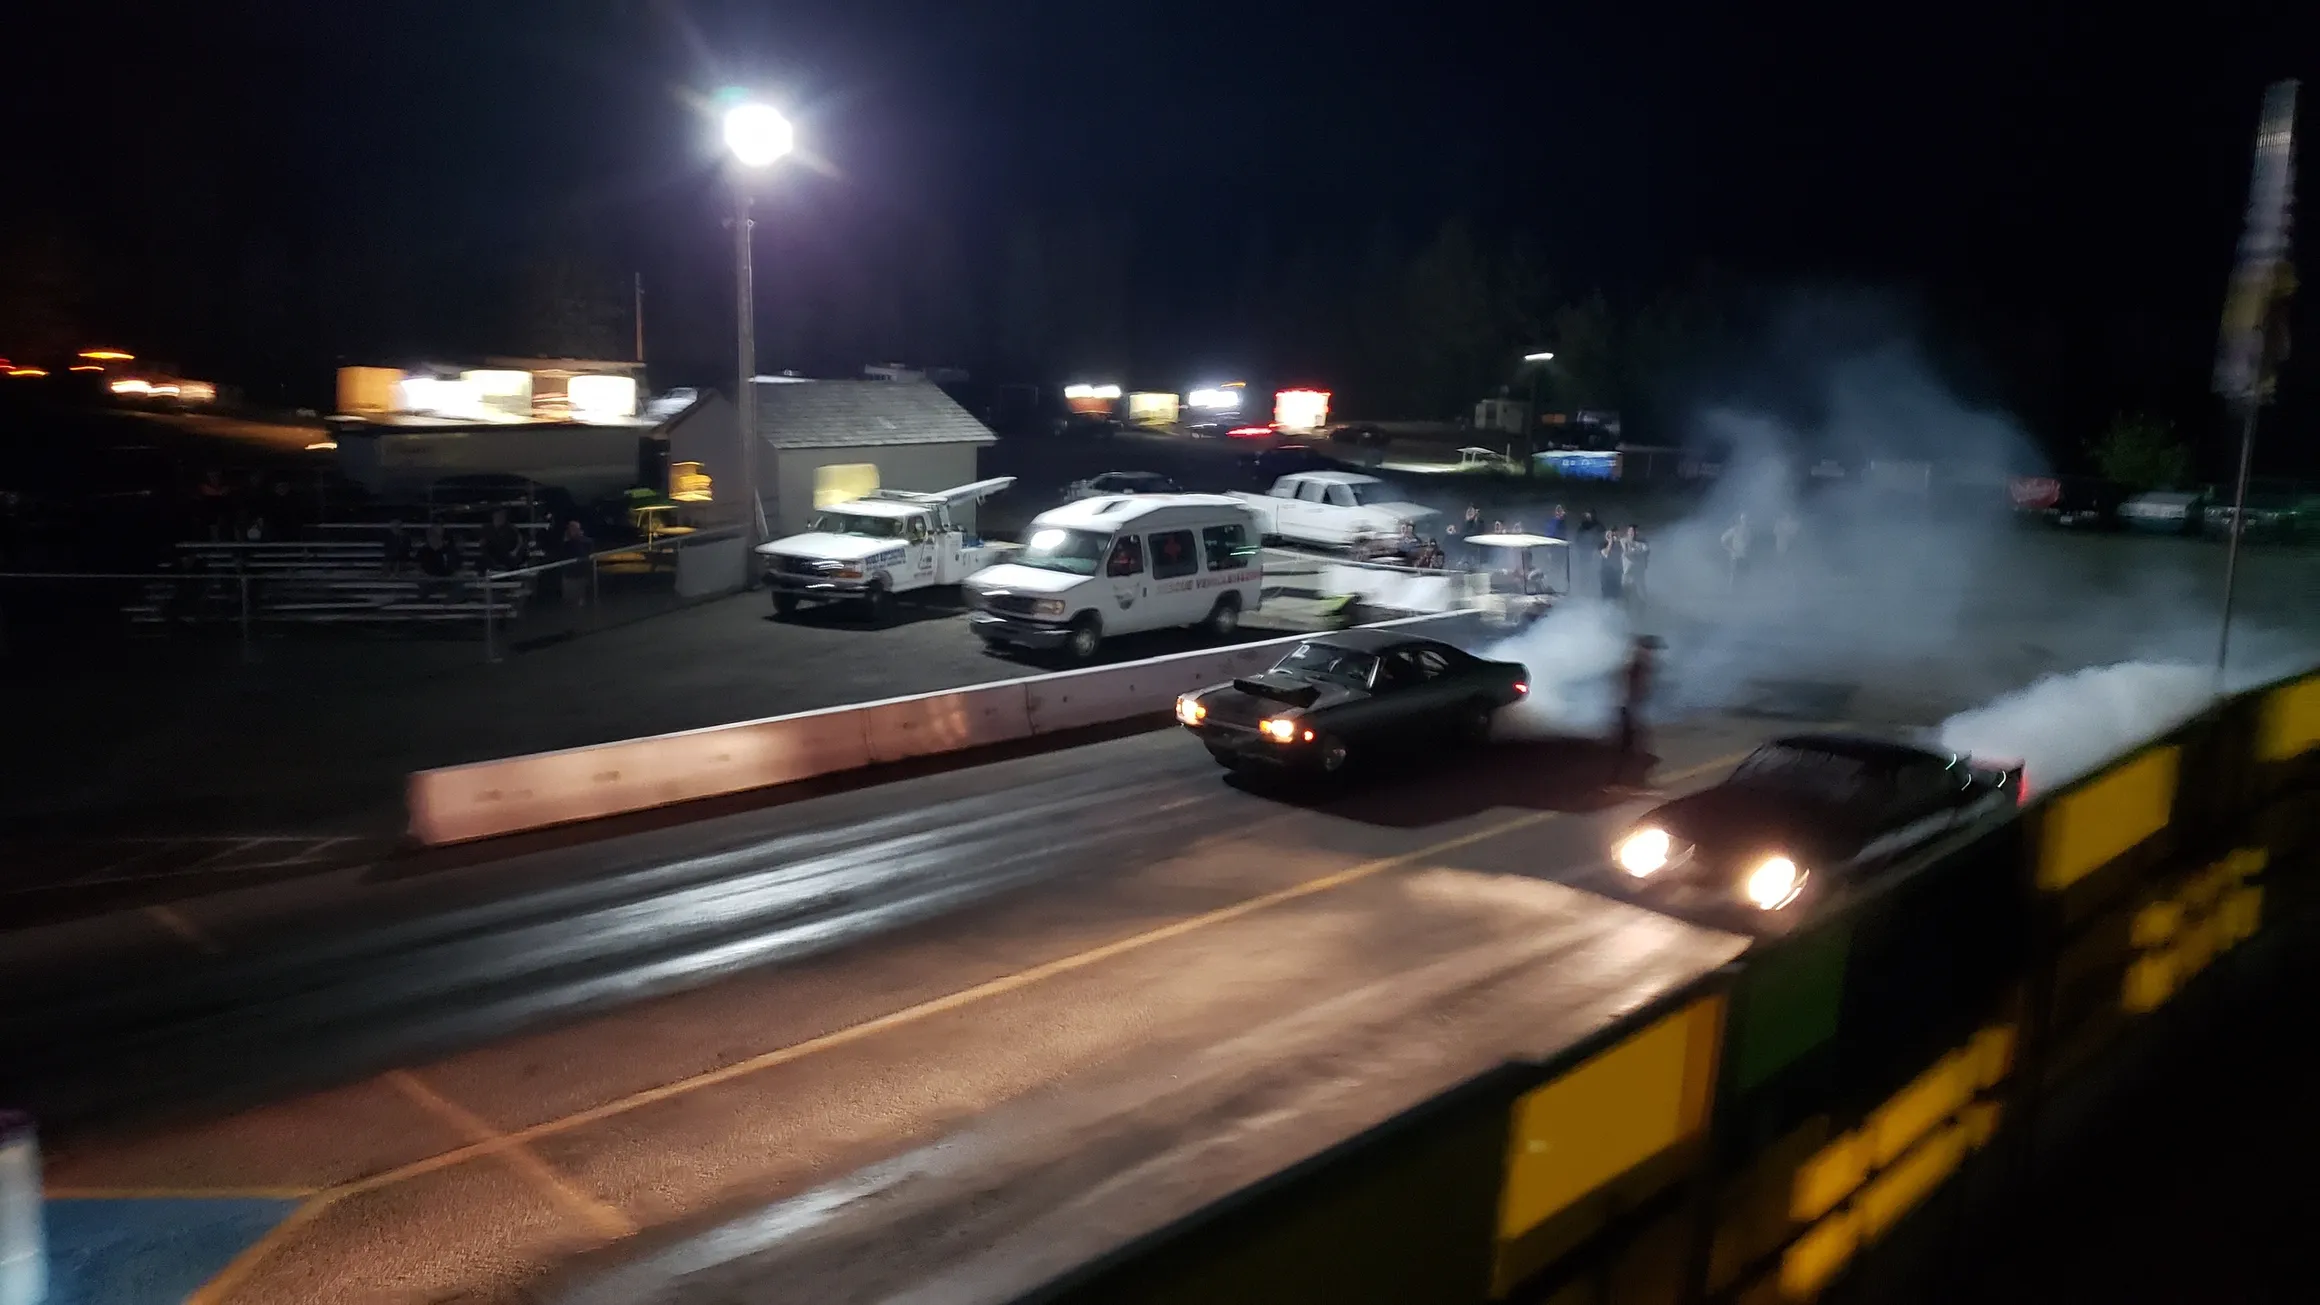 Thunder Mountain Raceway | Nighttime racing with smoky exhaust